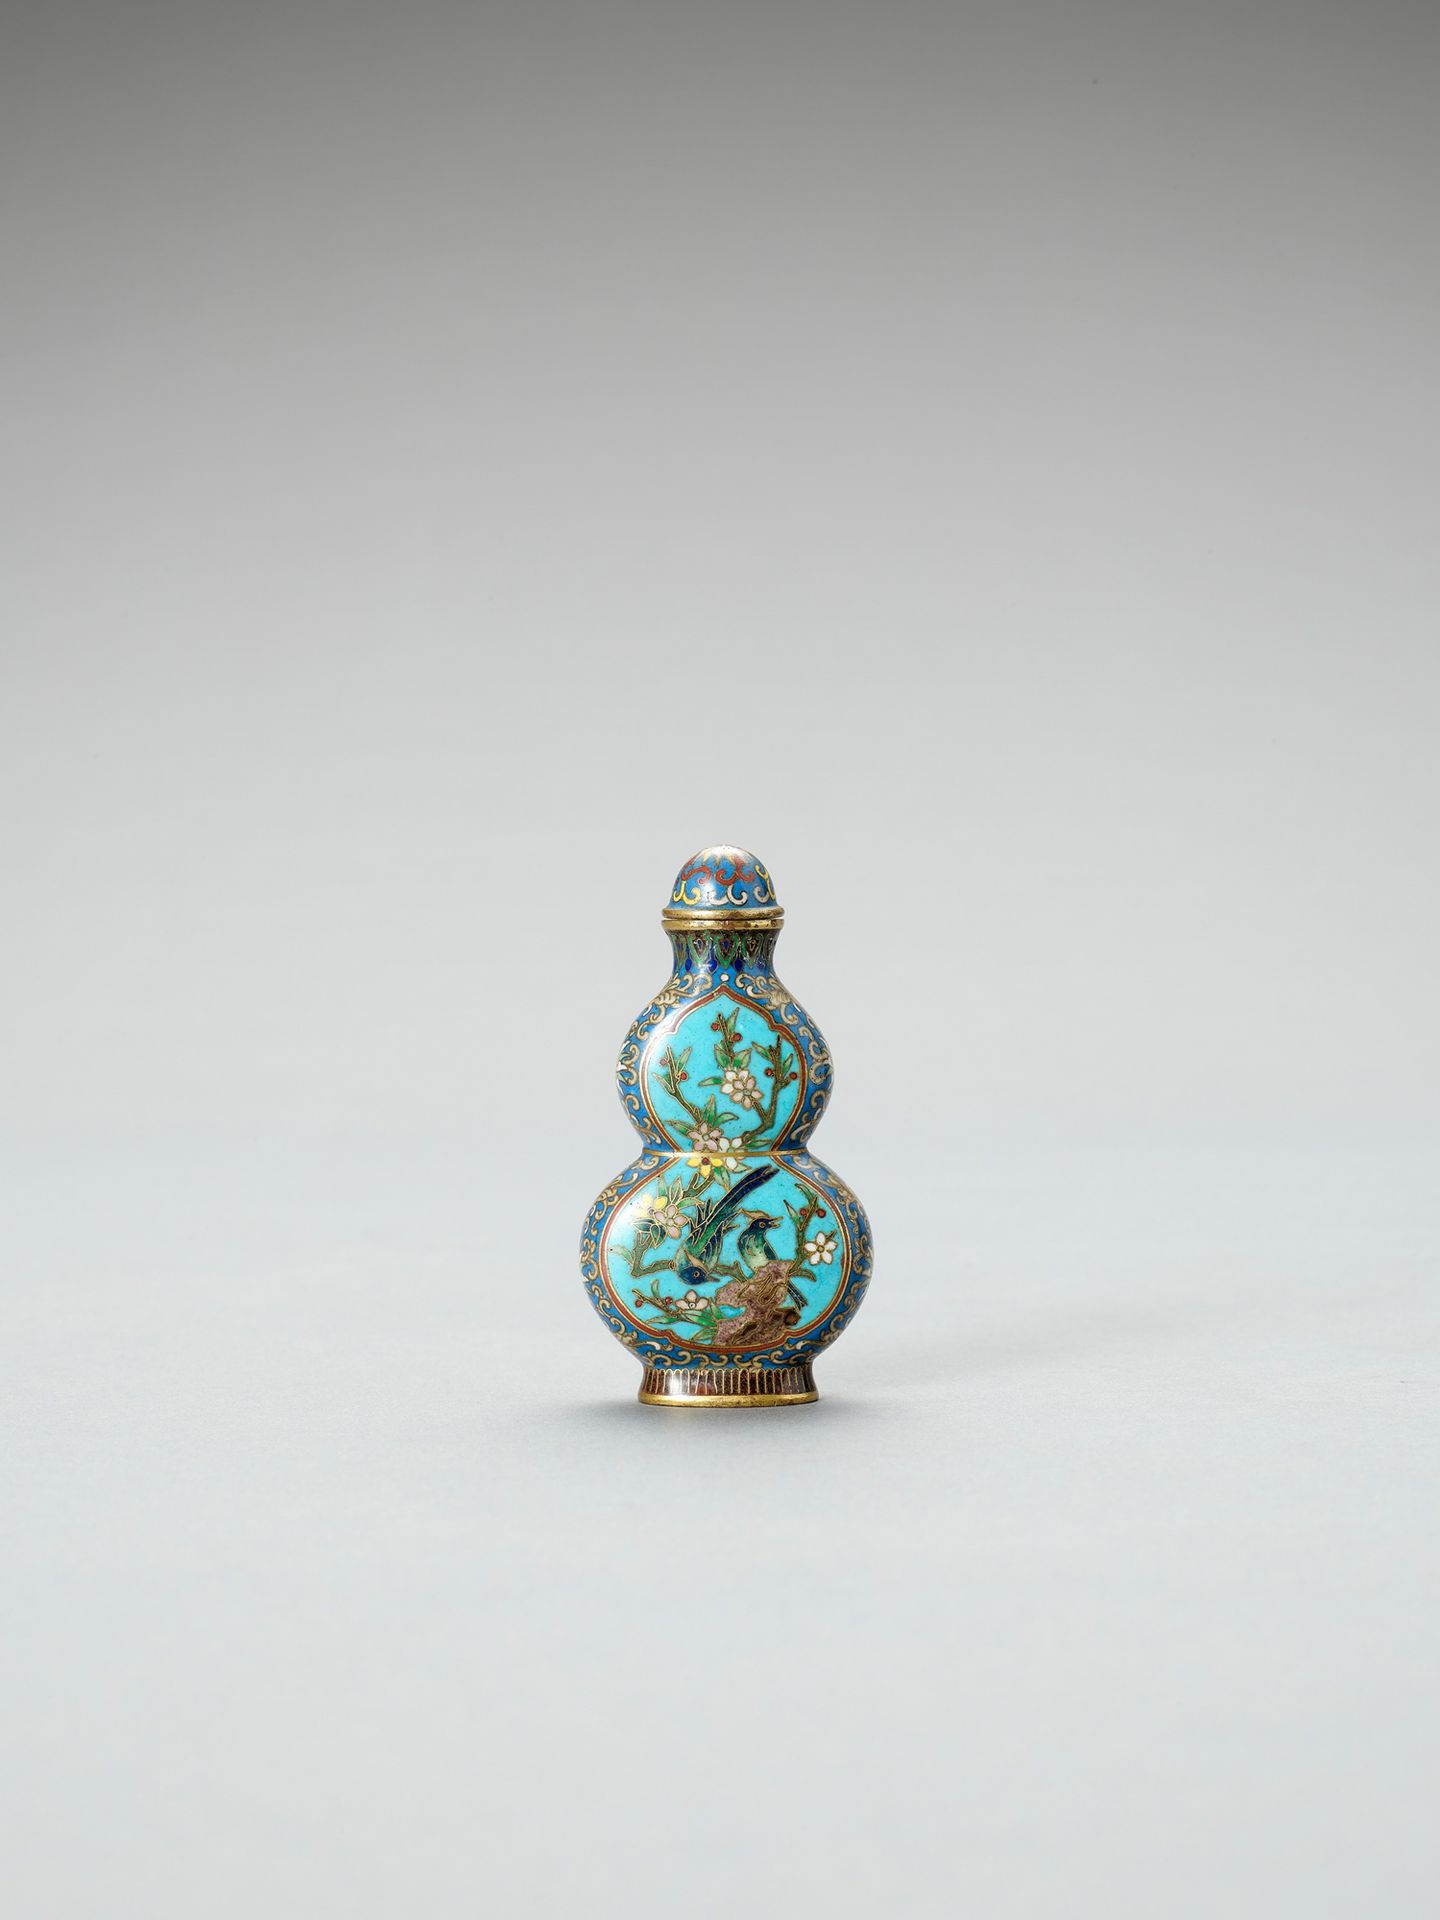 A DOUBLE-GOURD CLOISONNE SNUFF BOTTLE 一件双口克里奥森纳鼻烟壶
中国，19世纪末。瓶身装饰有两处储备，每一面都有鸟儿栖息在&hellip;